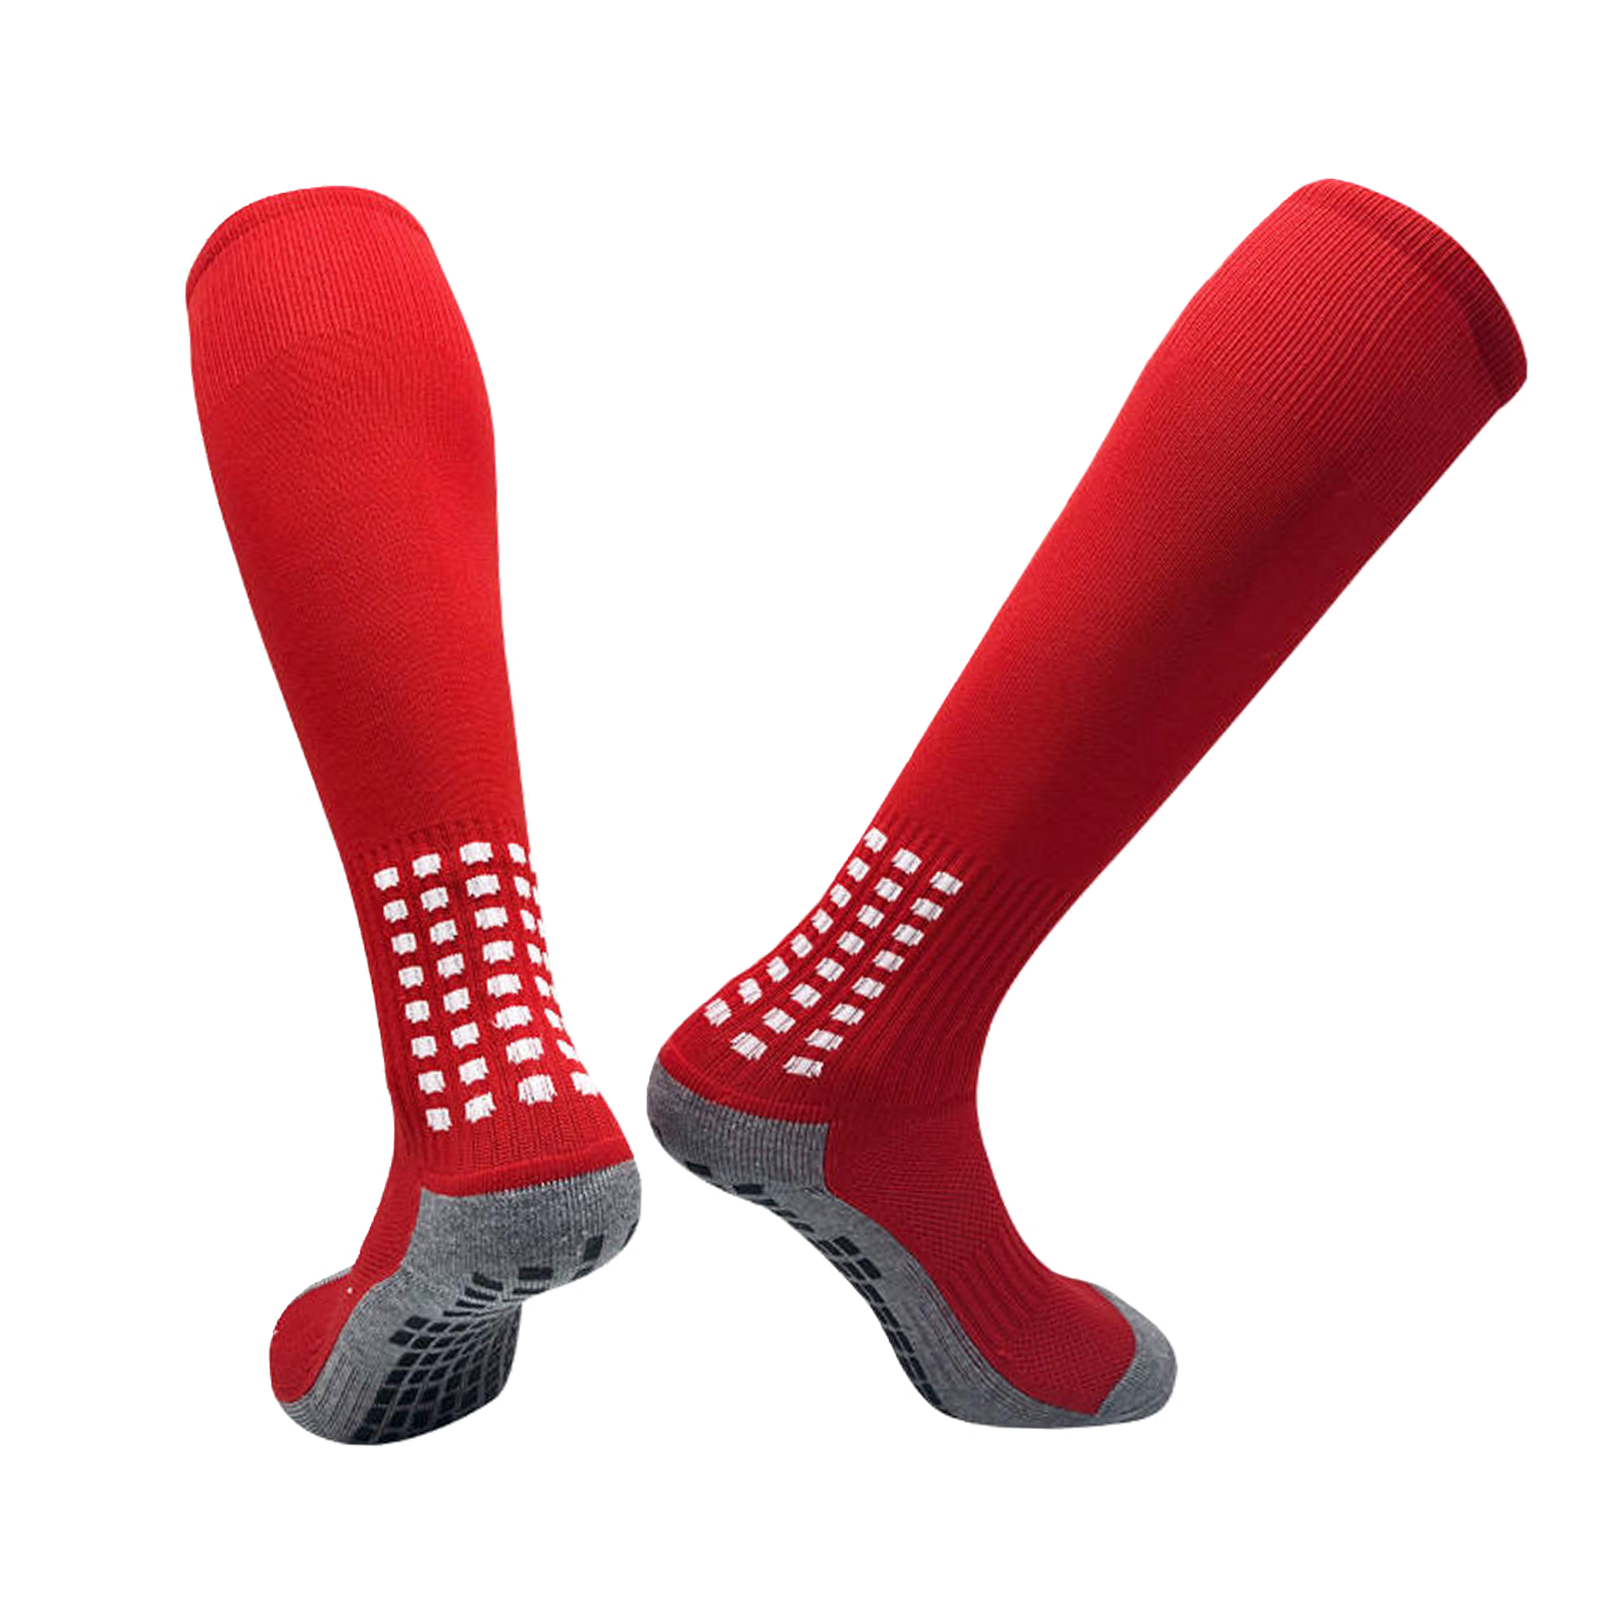 Red_socks